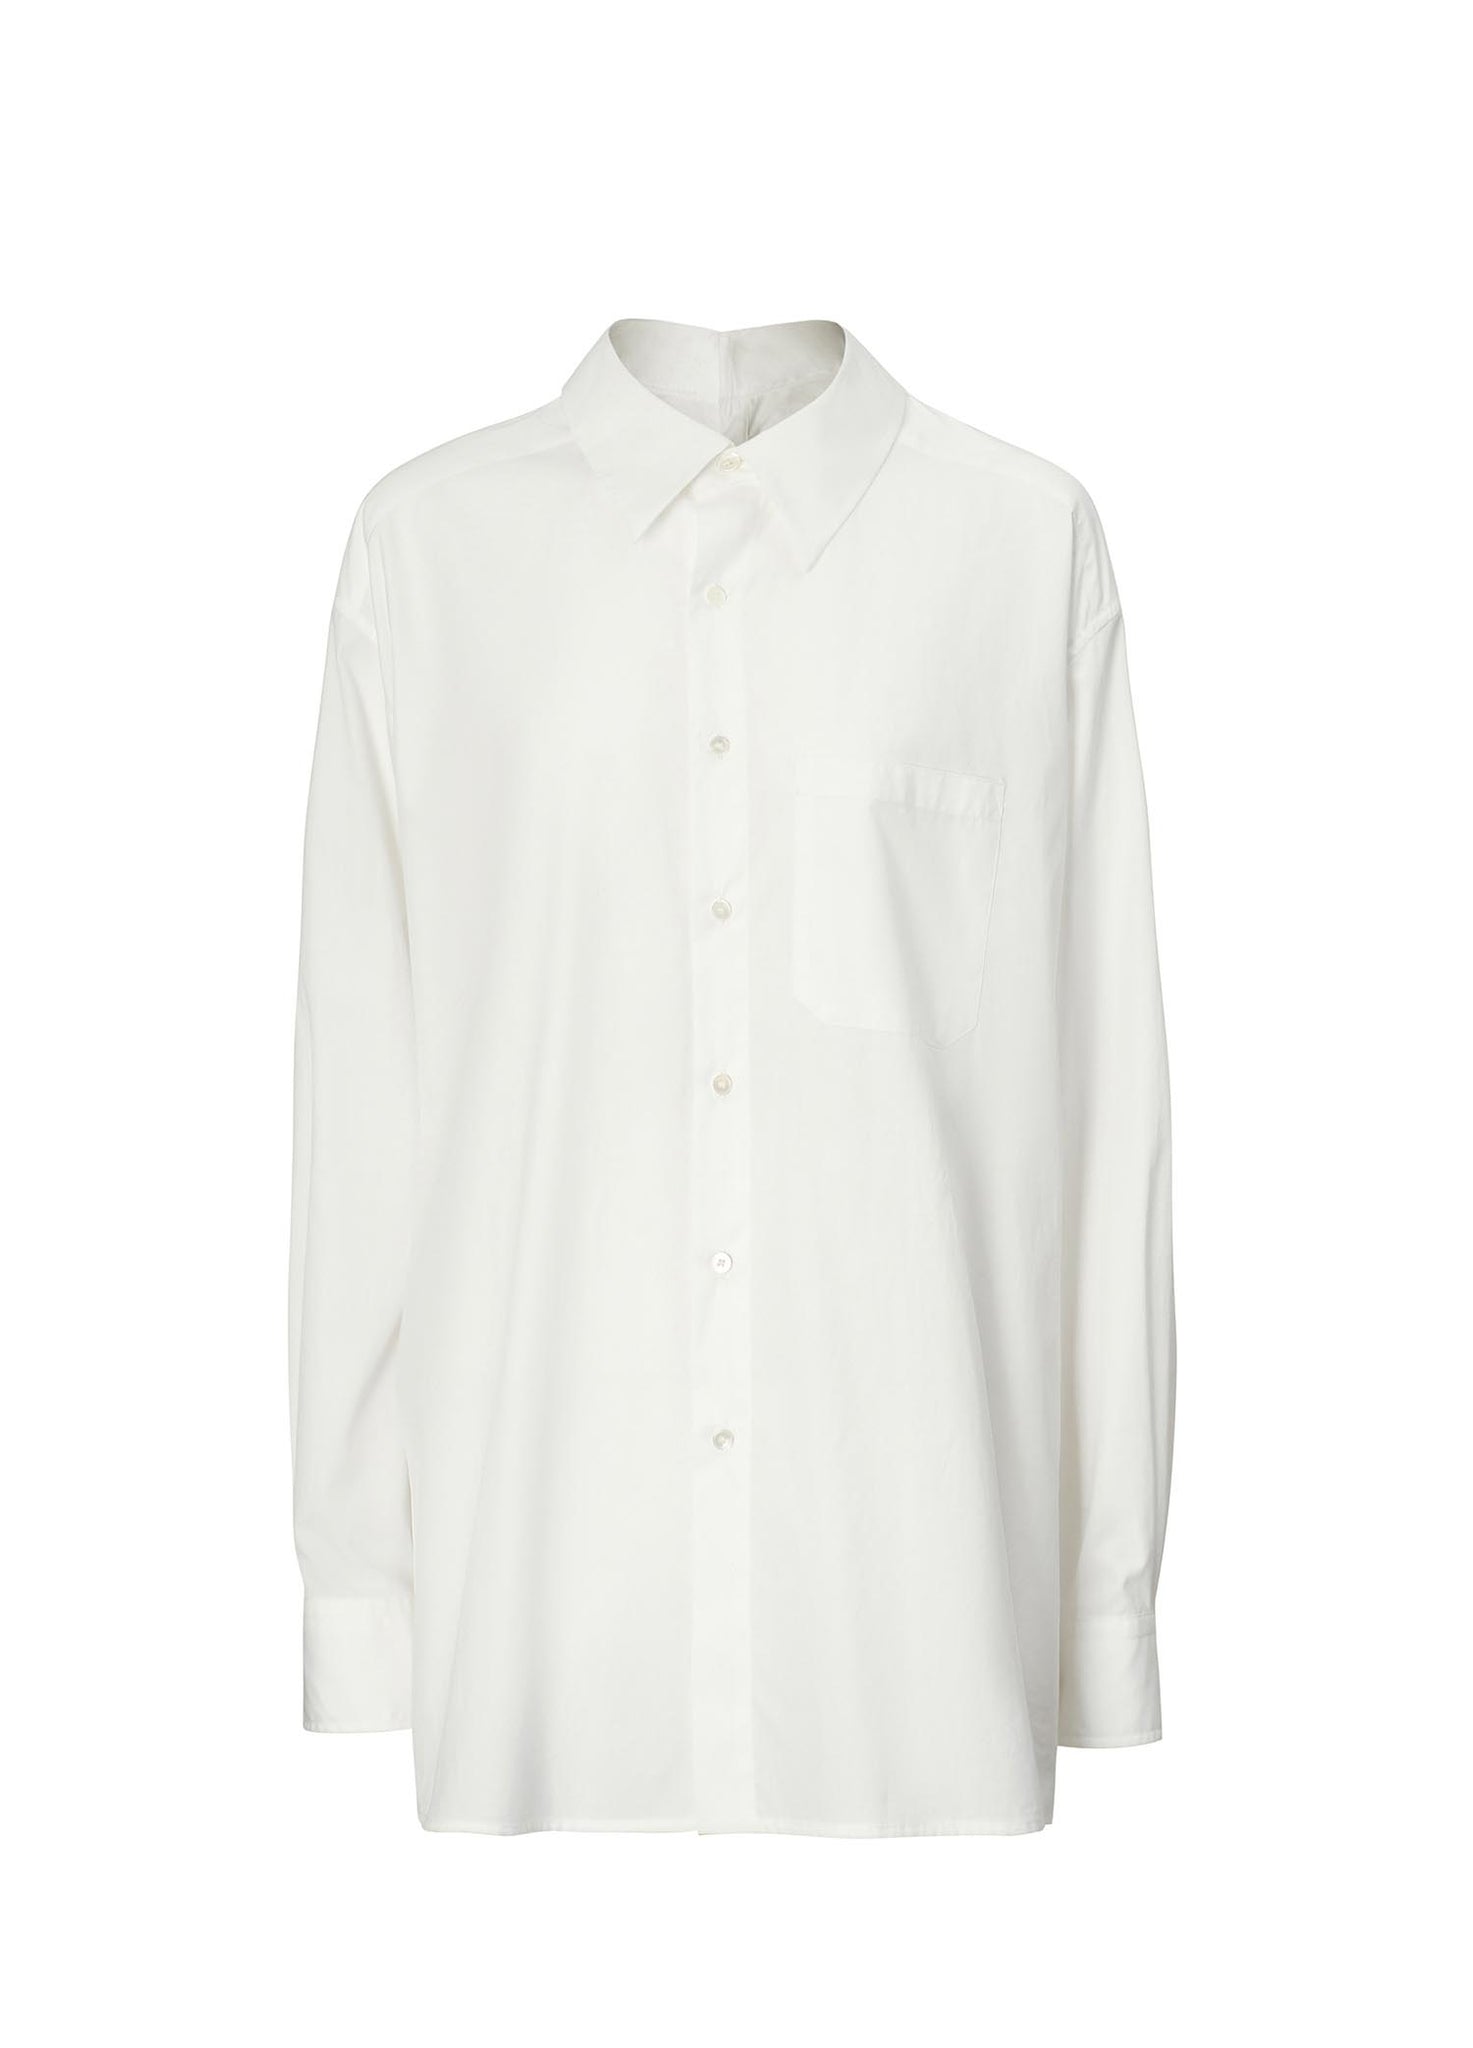 Shirts / Less & Samuel Oversize Double-Sided Striped Shirt